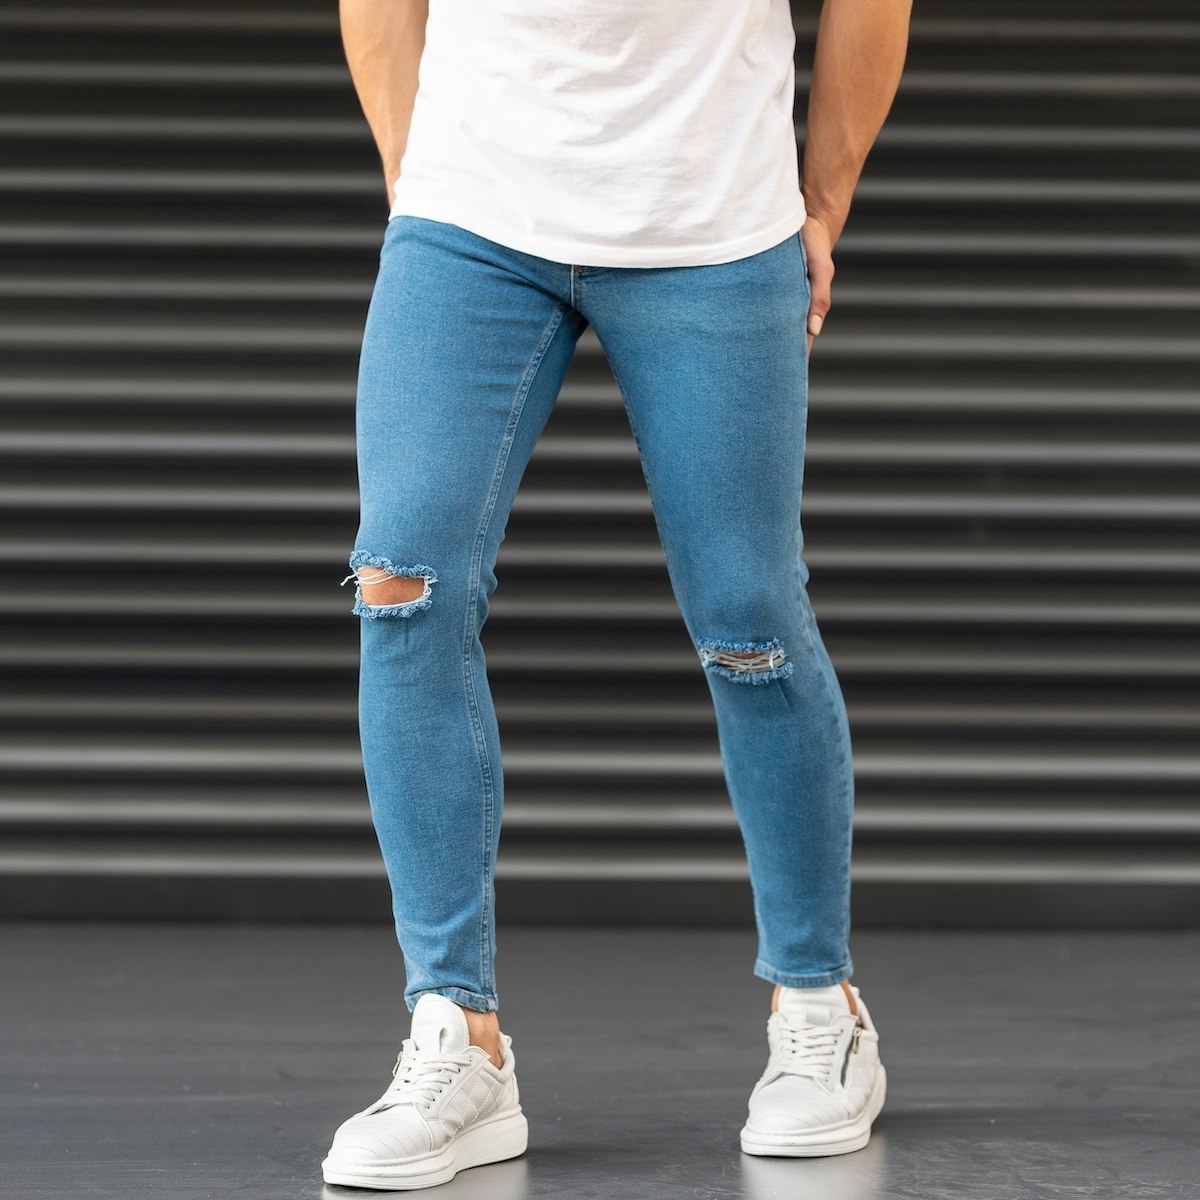 denim light blue ripped jeans mens